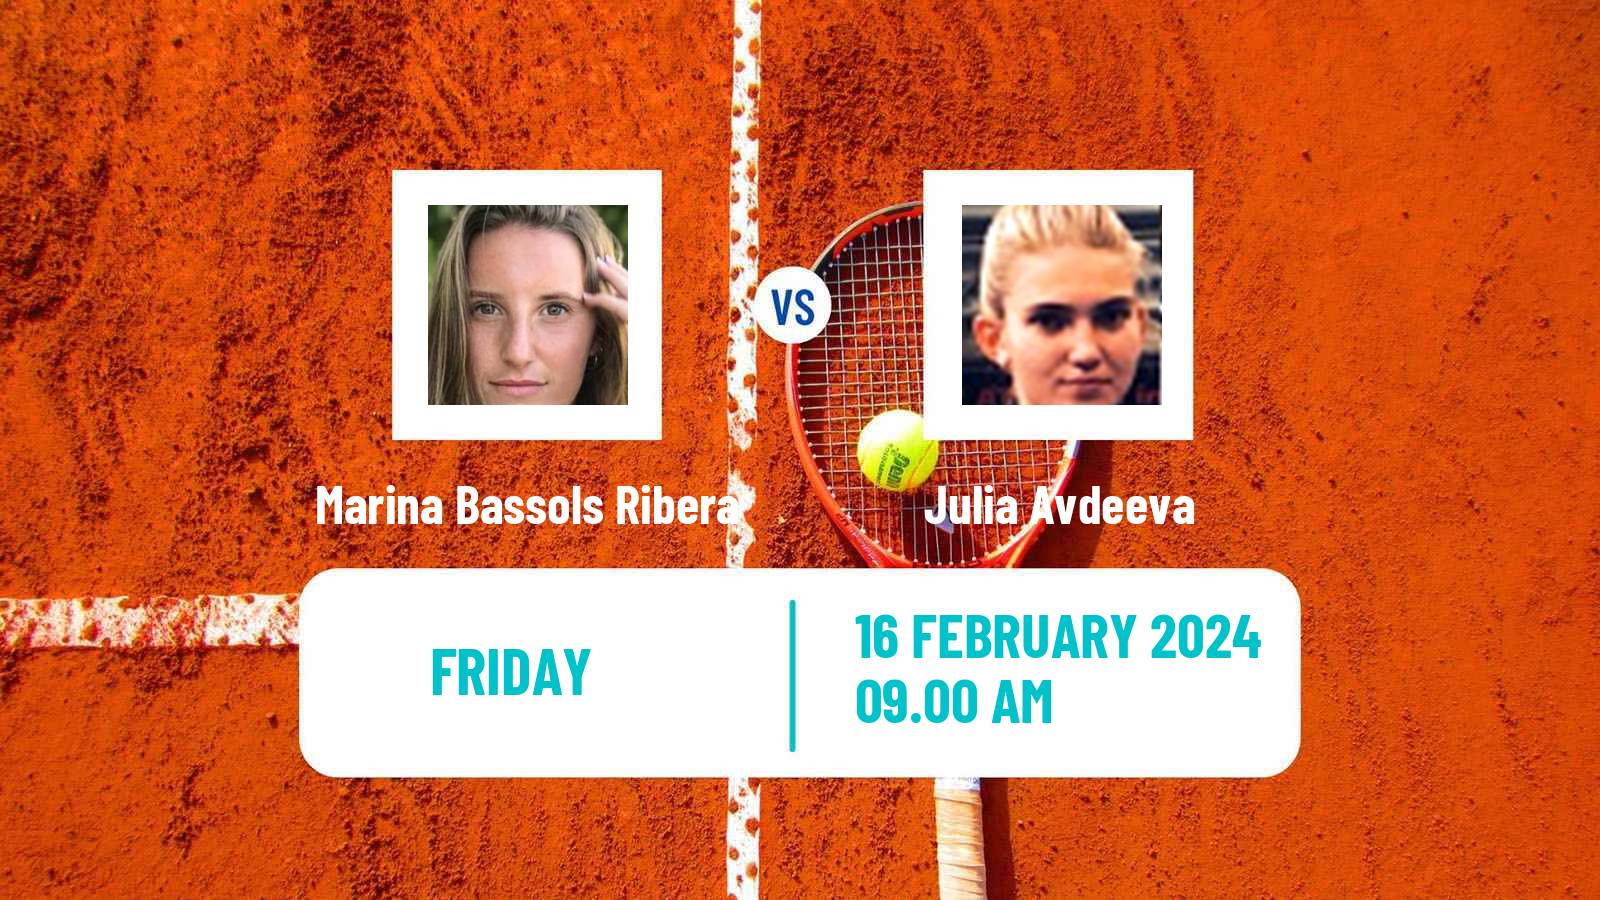 Tennis ITF W75 Altenkirchen Women Marina Bassols Ribera - Julia Avdeeva